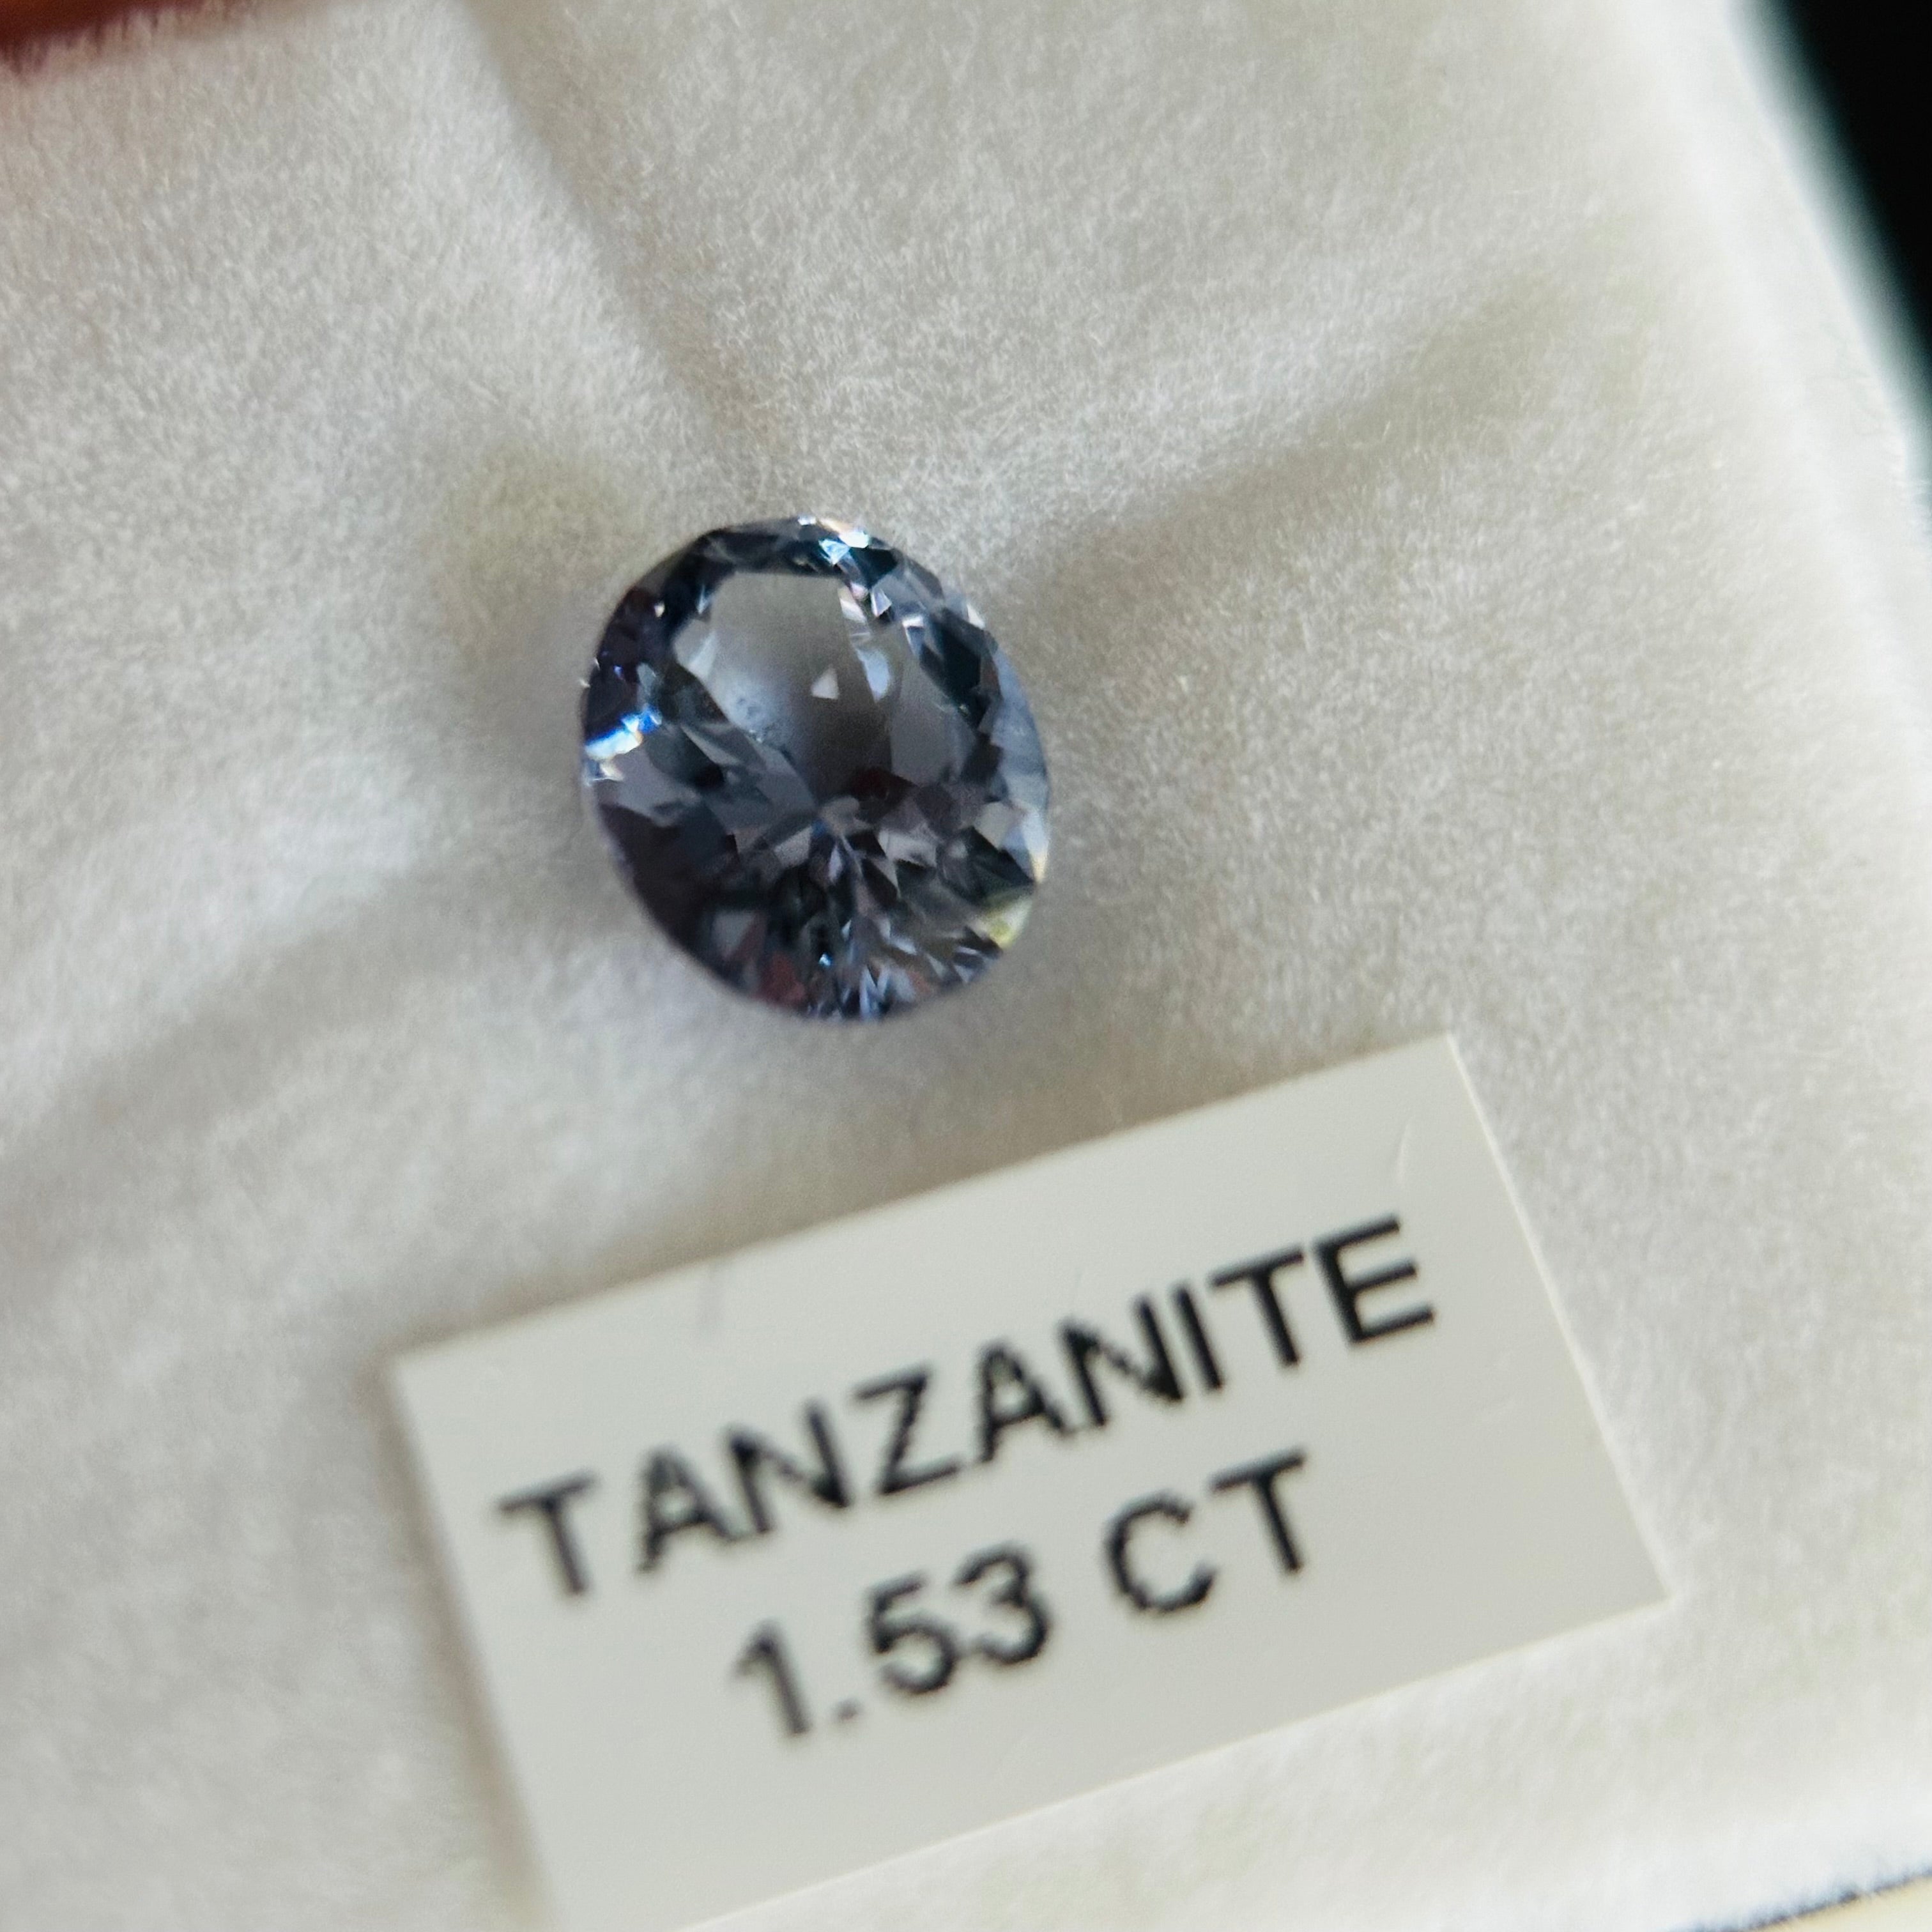 1.53ct Tanzanite, Tanzania. Gently Heated